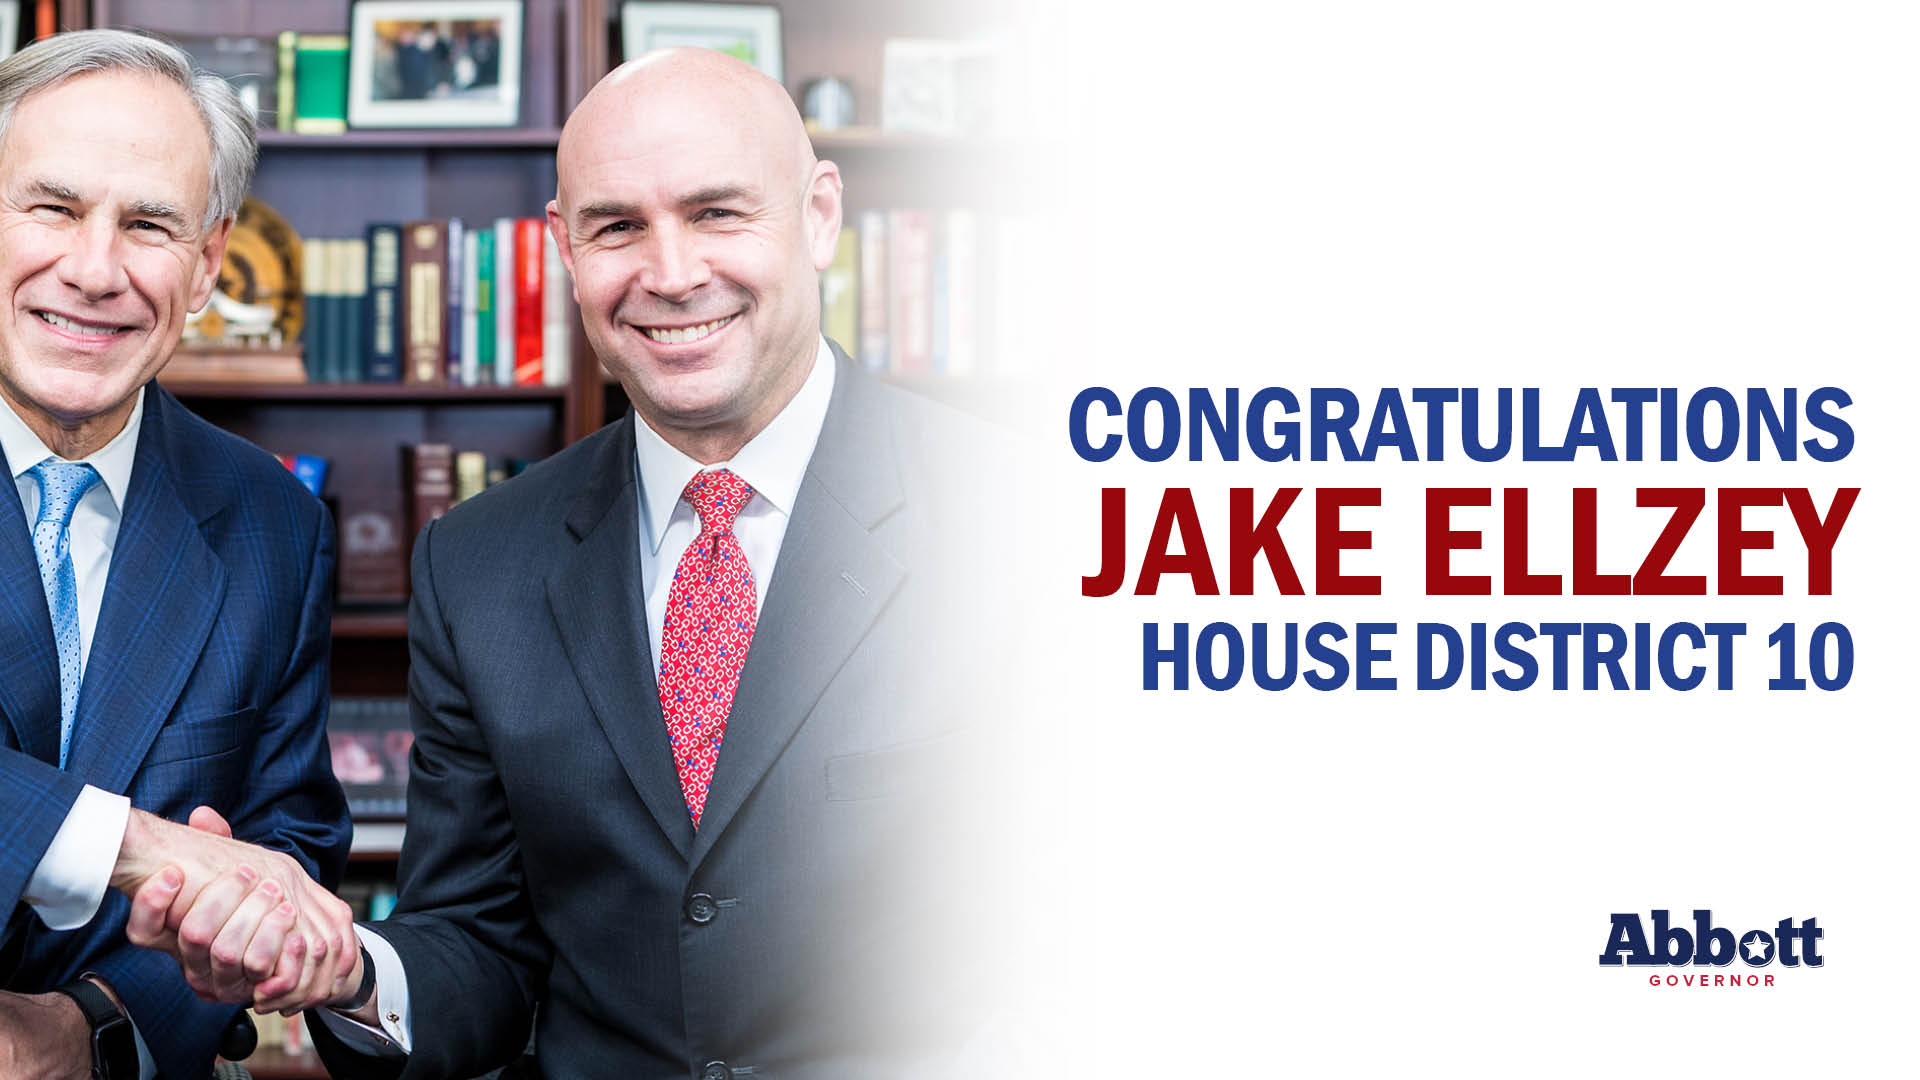 Governor Abbott Congratulates Jake Ellzey On Election Win